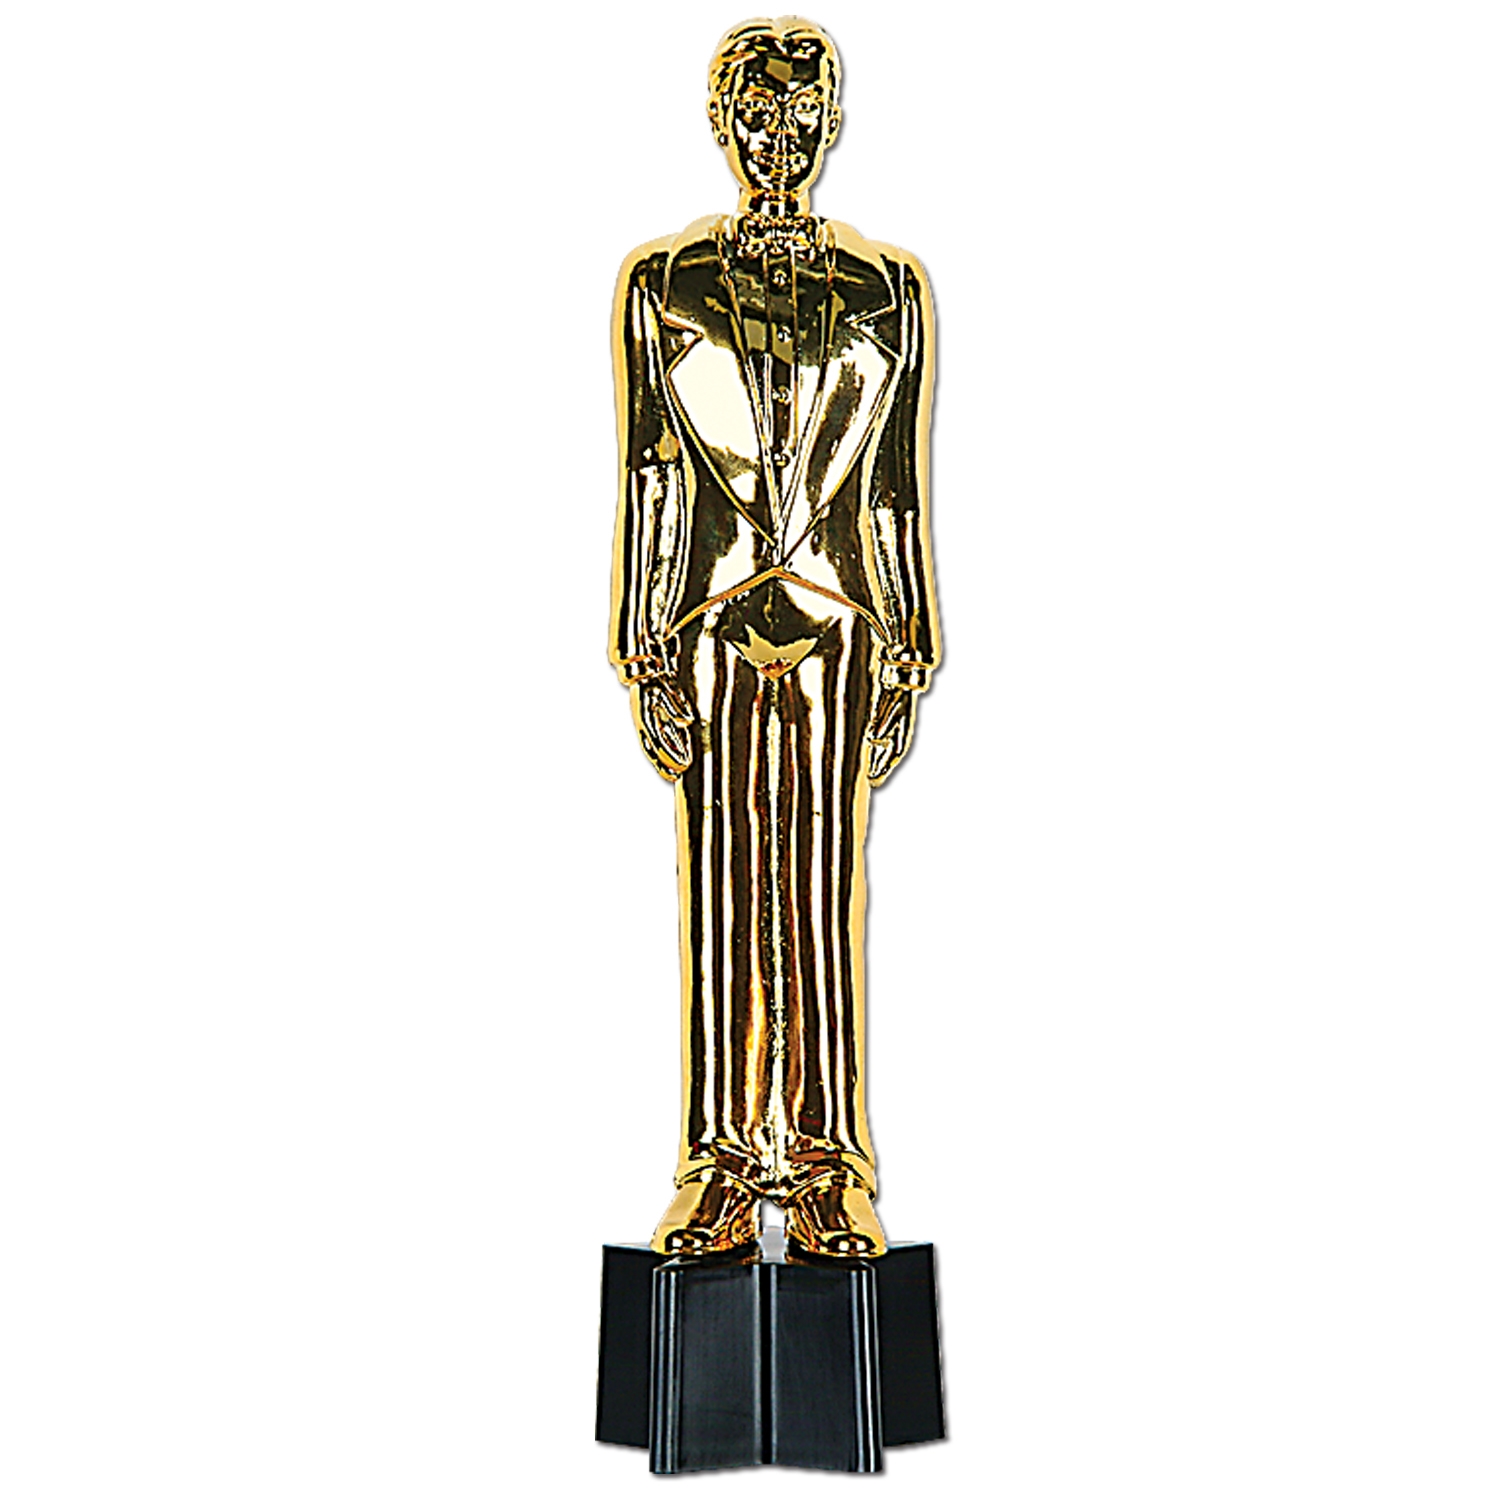 awards night statue in gold that looks like an Oscar award